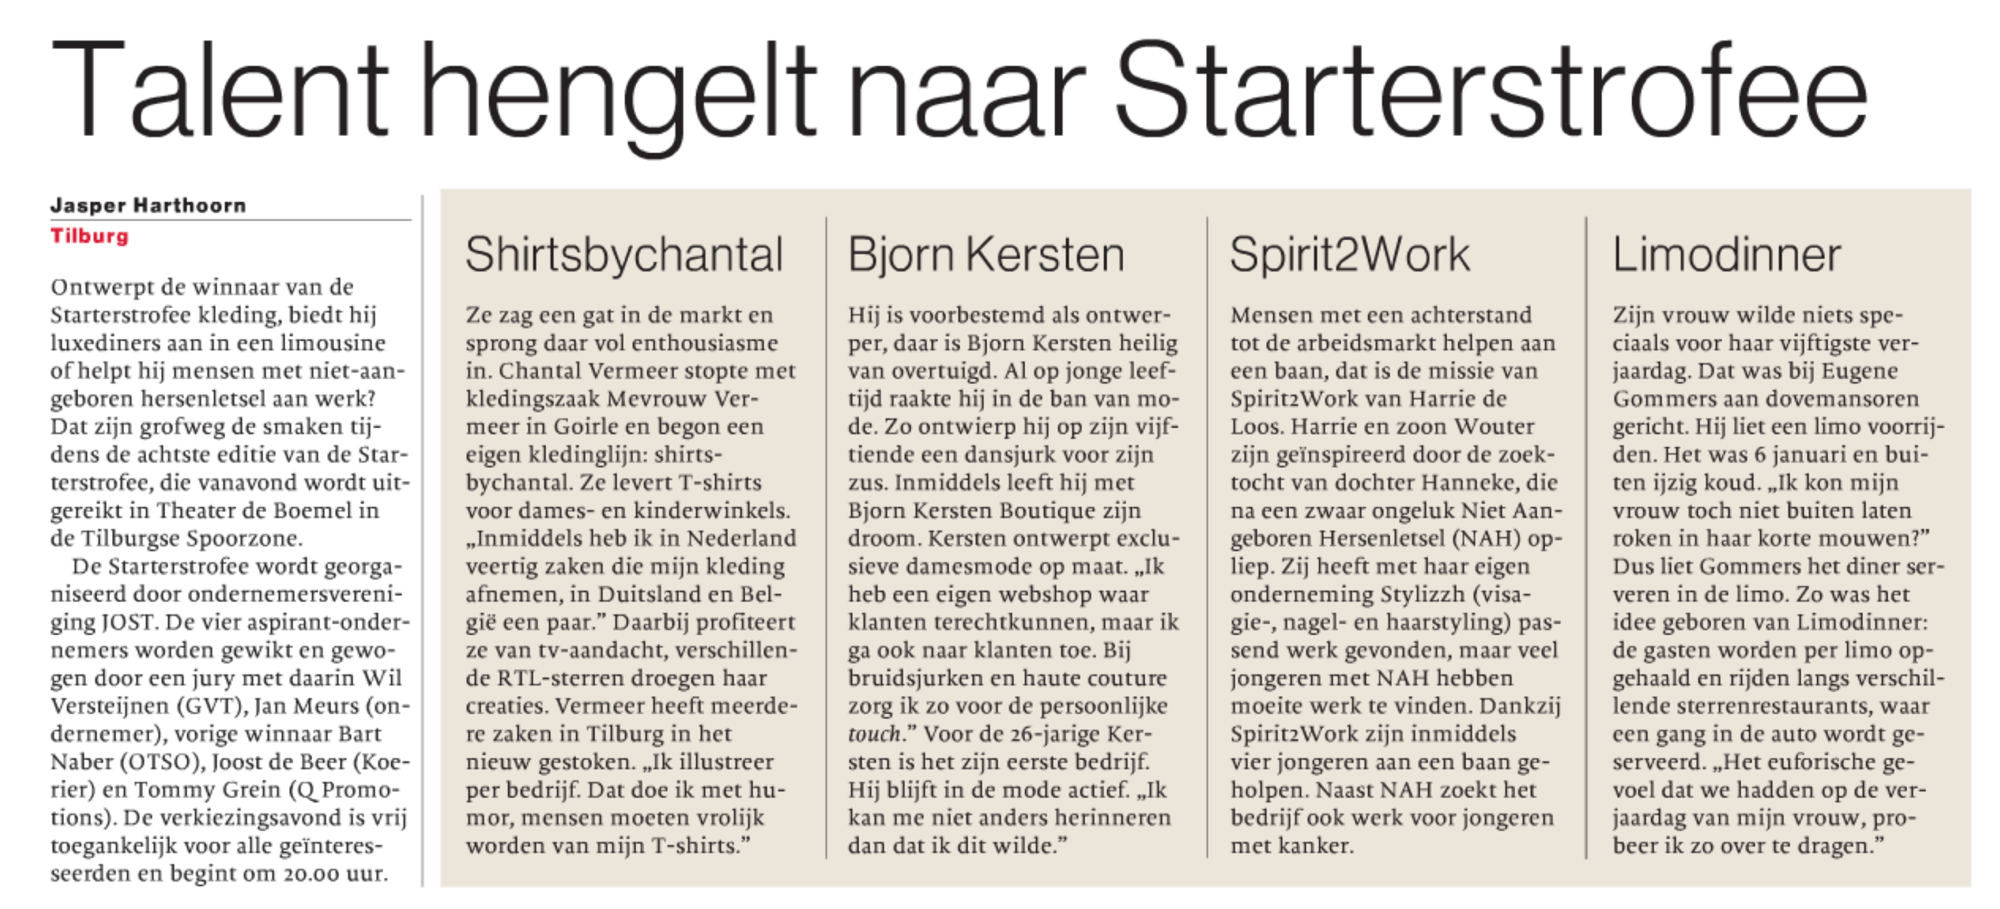 Brabants Dagblad - Starterstrofee